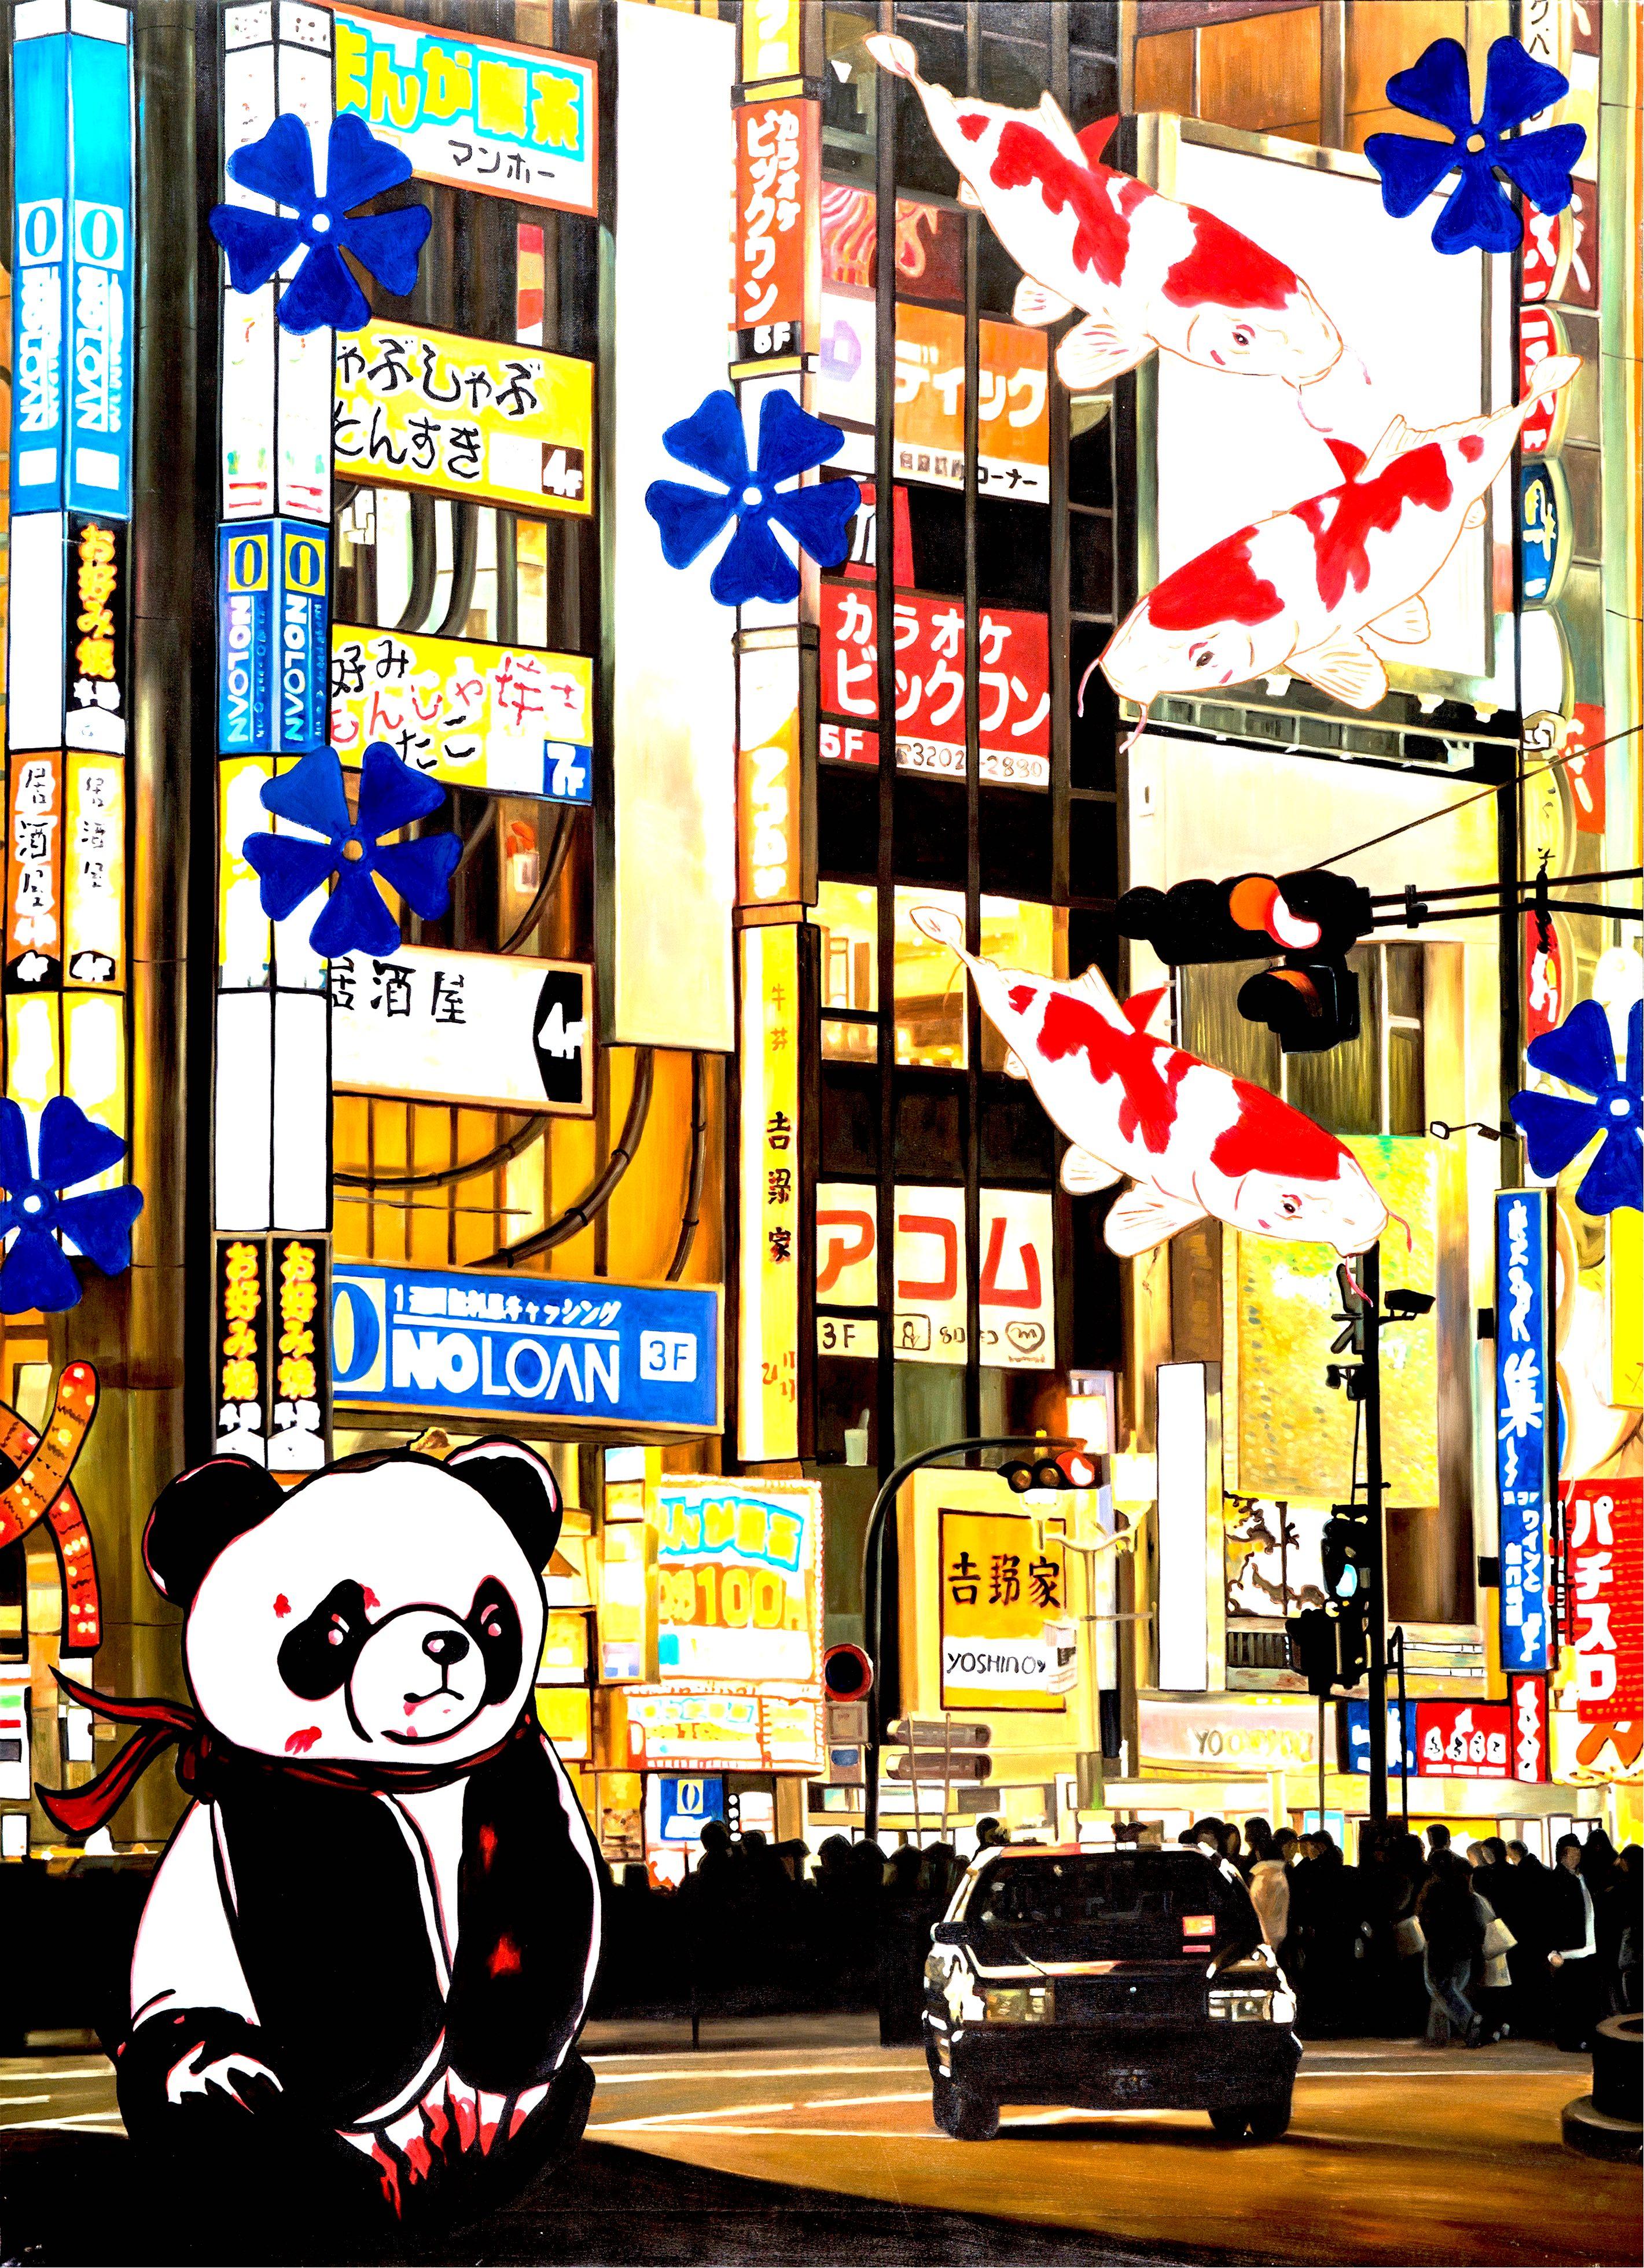 No Loan Twilight : Pandasan's Luminescent Reverie - Painting by HIRO ANDO